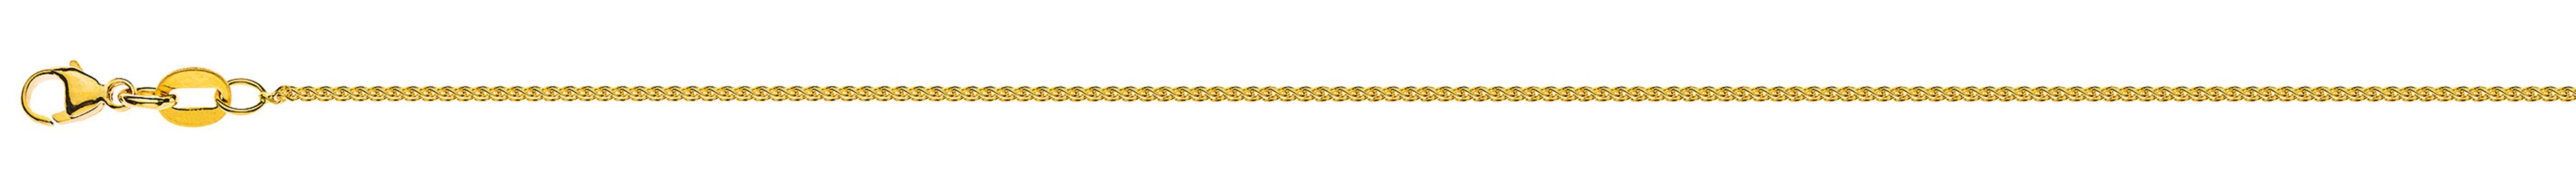 AURONOS Prestige Necklace yellow gold 18K cable chain 50cm 1.0mm